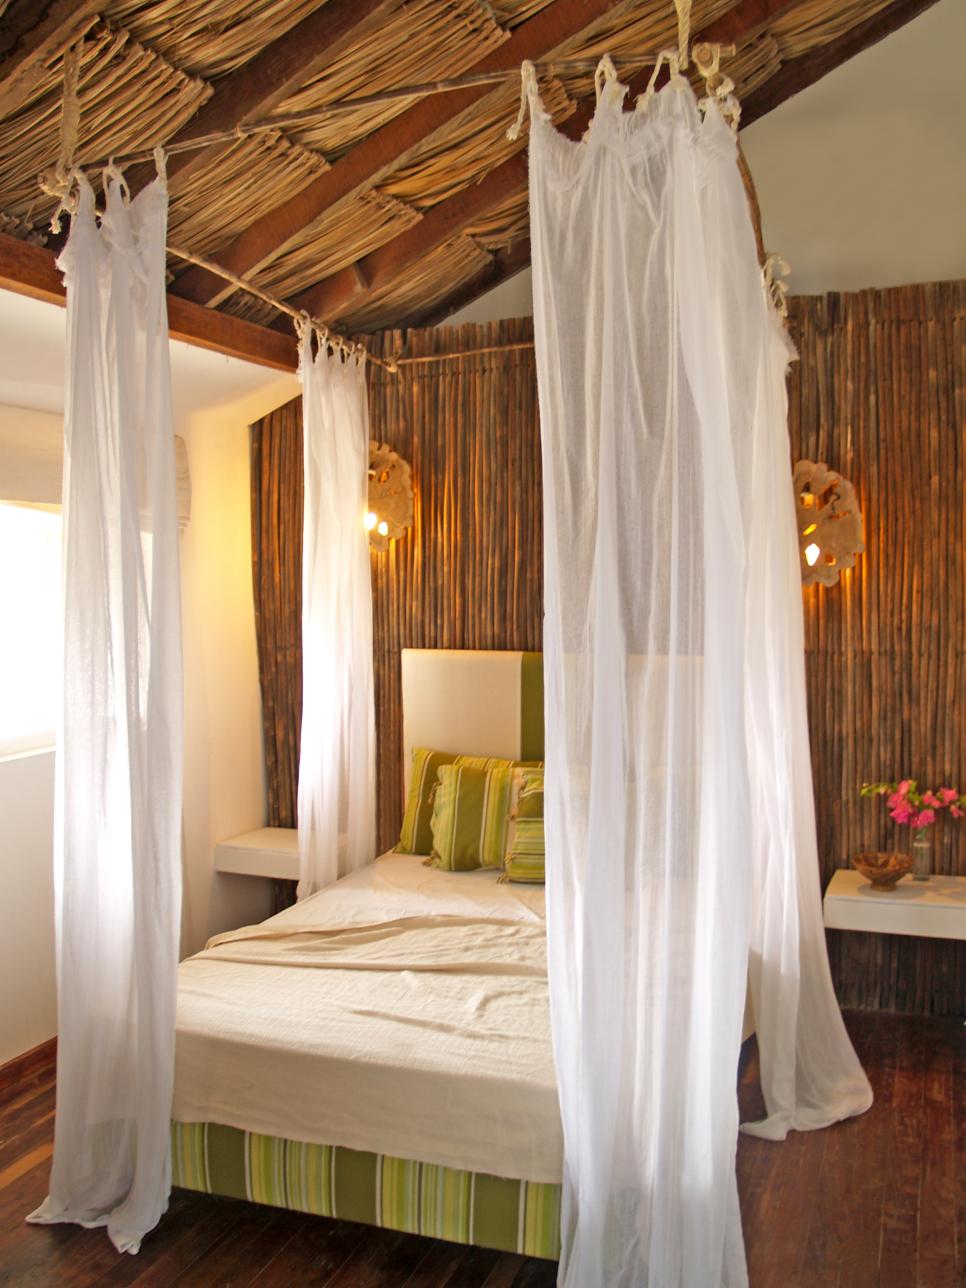 Stylish Tropical Bedroom Design